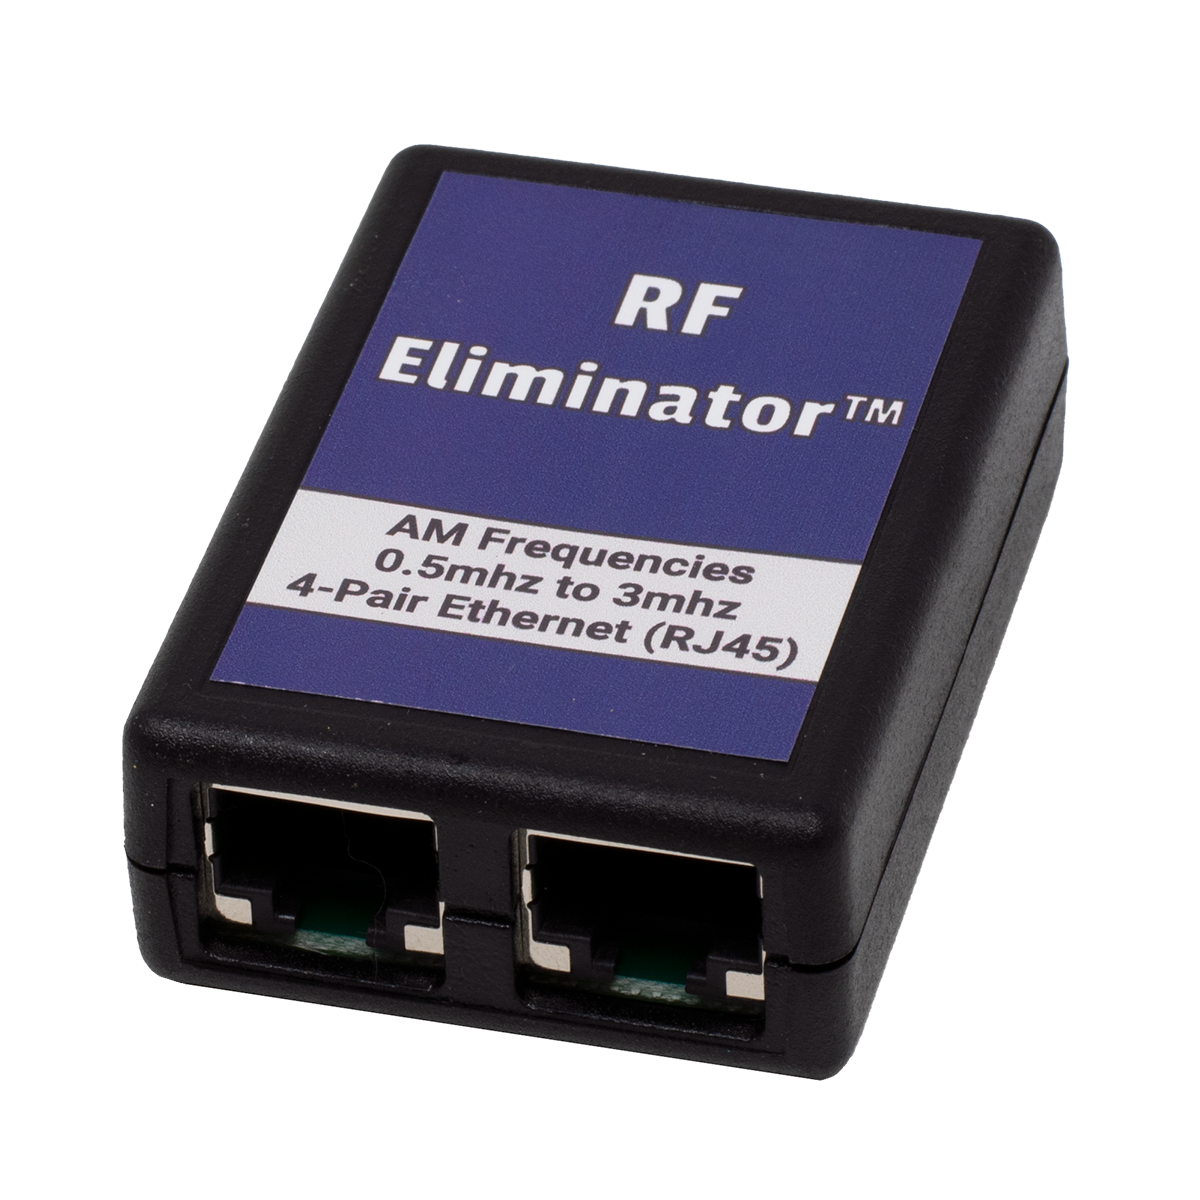 RF Eliminator - 4 Pair Ethernet - AM (Side View)